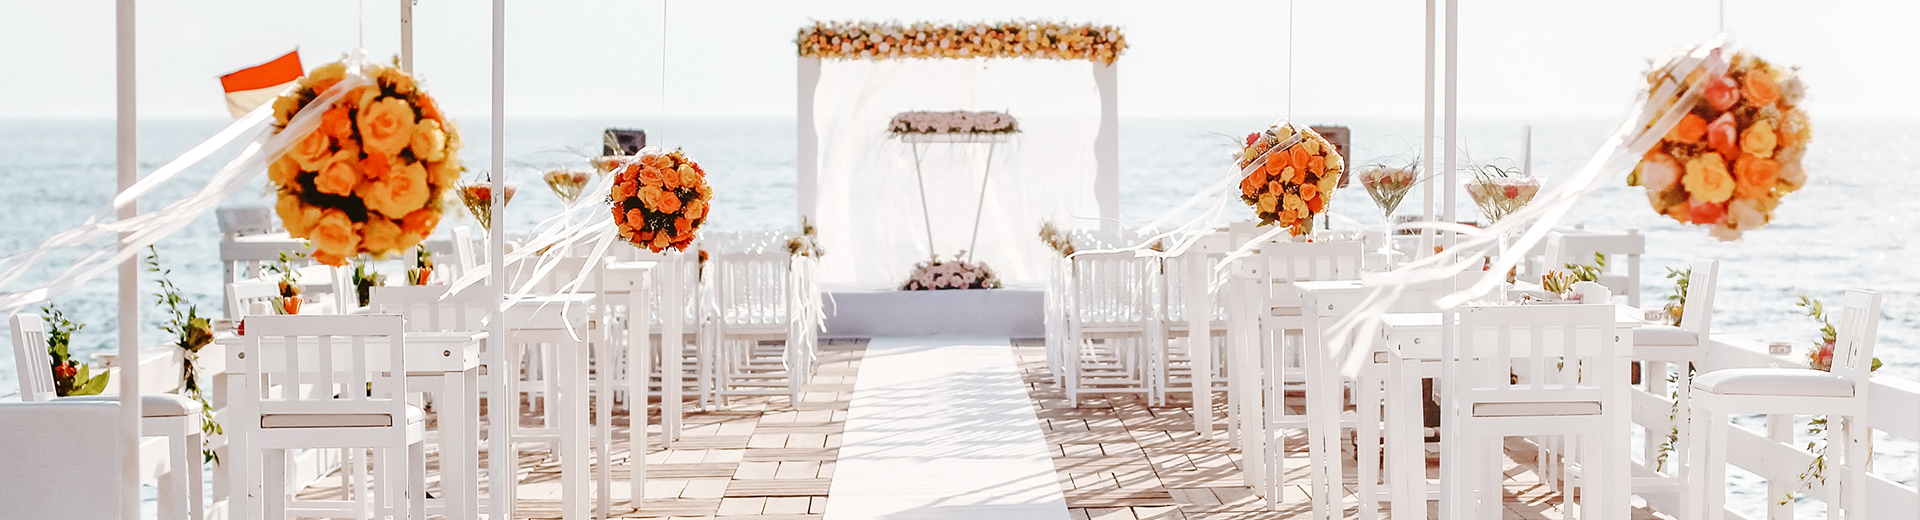 view of an elegant wedding isle with orange flowers